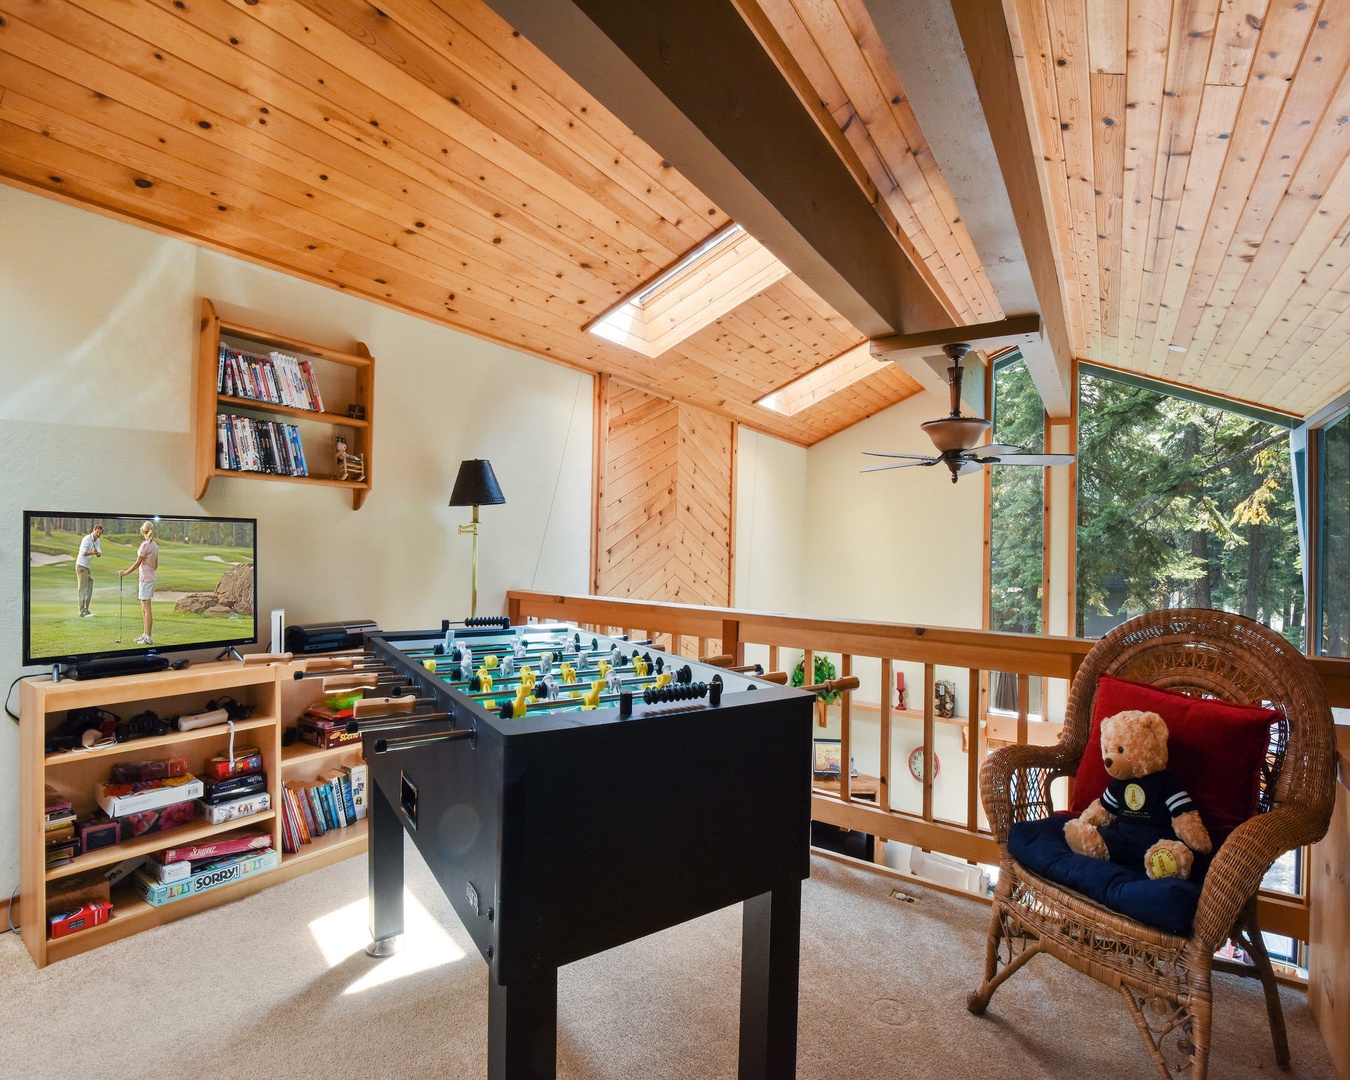 Loft/Game Room: 2 Twin beds, foosball table, Smart TV, board games